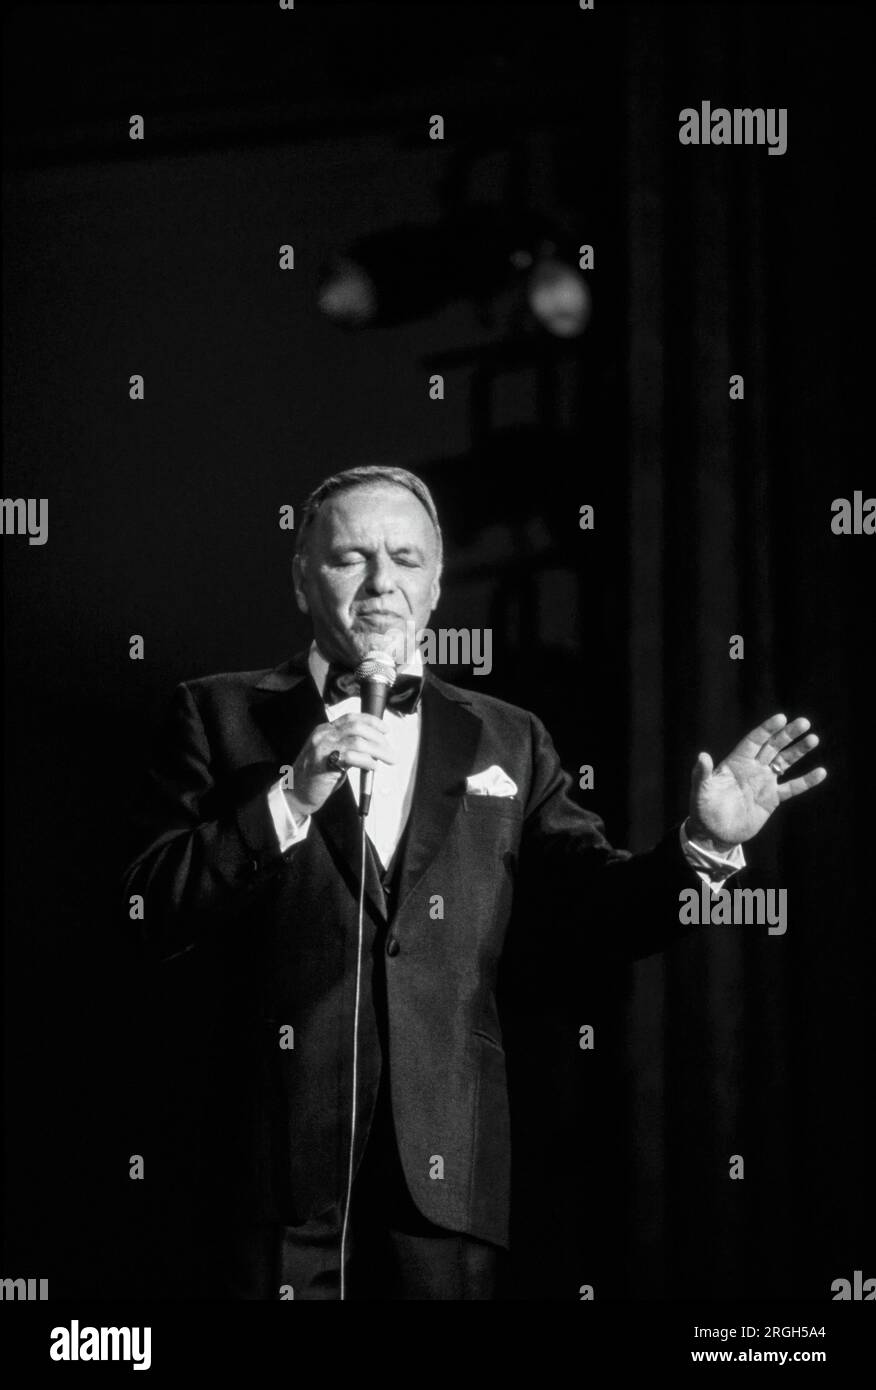 Frank Sinatra in performance, 1982. Photograph by Bernard Gotfryd ...